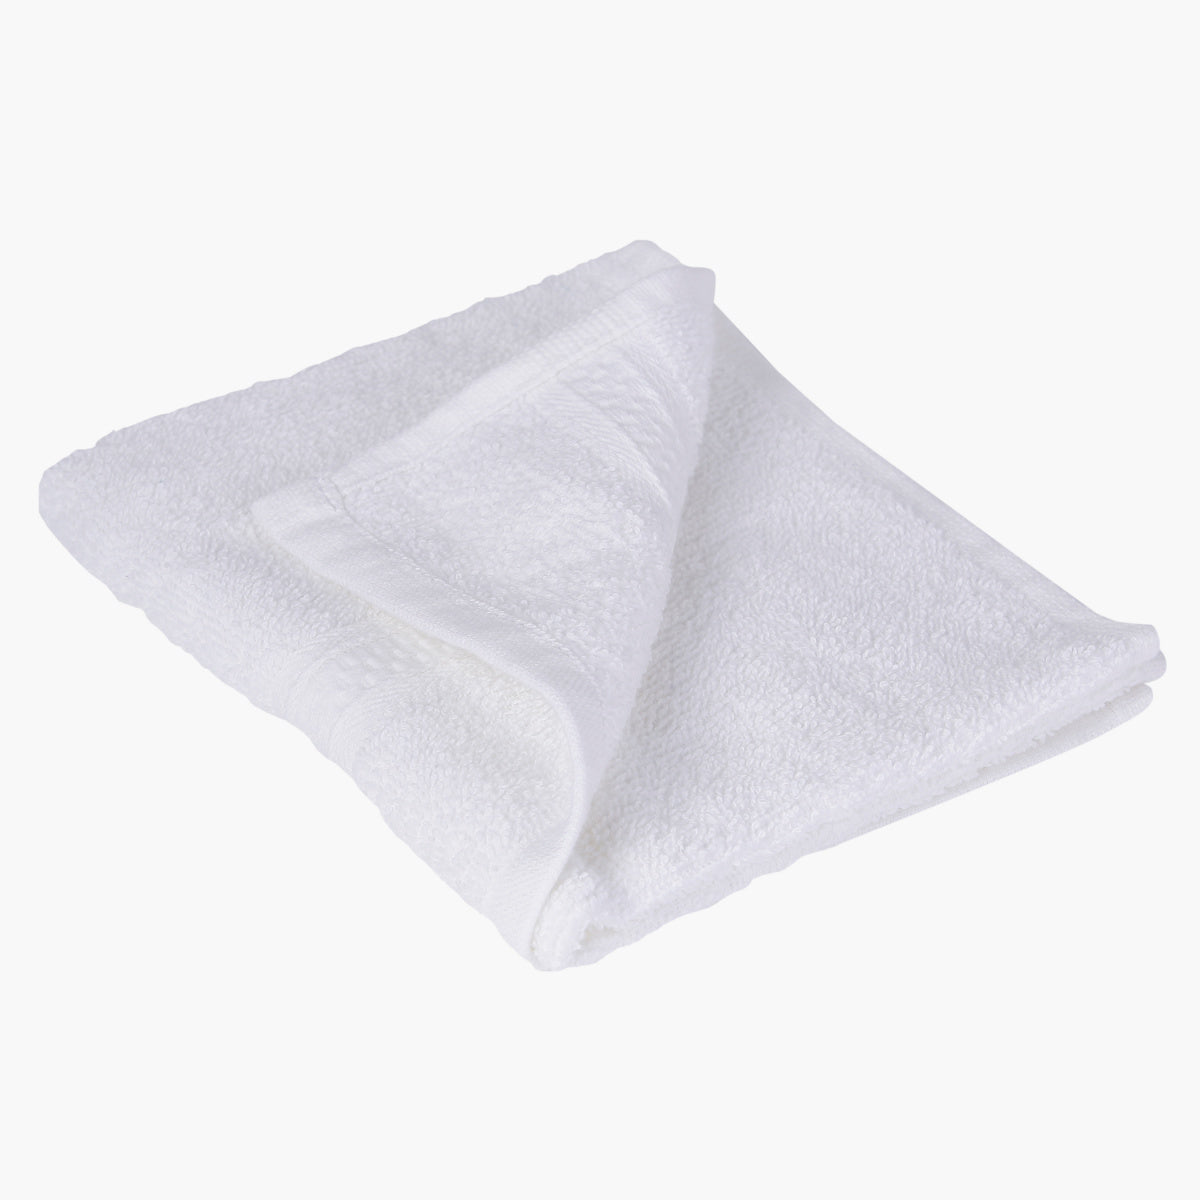 Austin Carded Towel